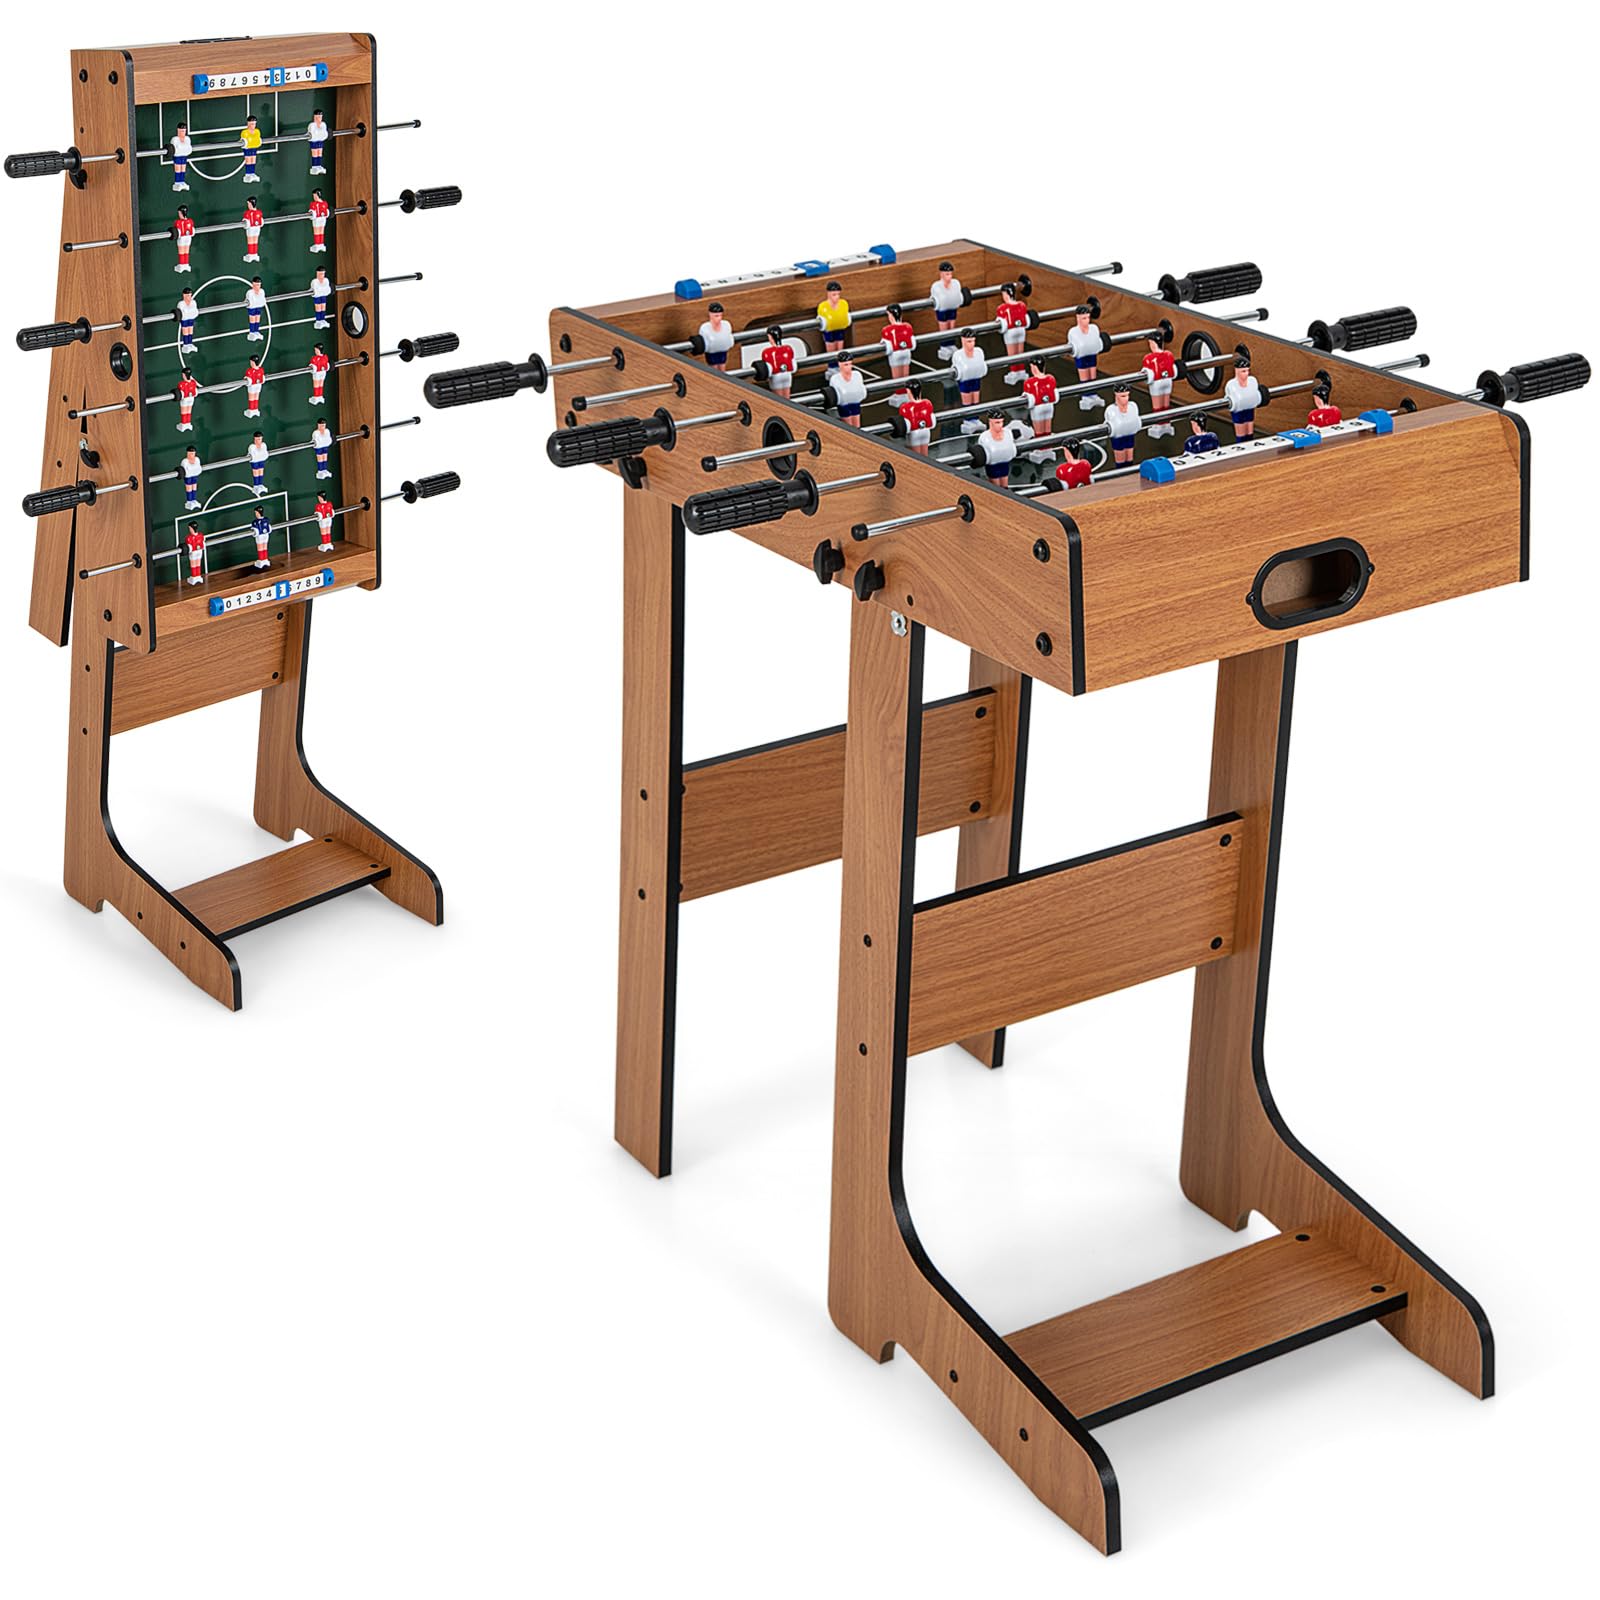 Giantex Folding Foosball Table, Space Saving Arcade Table Soccer with Durable Handle